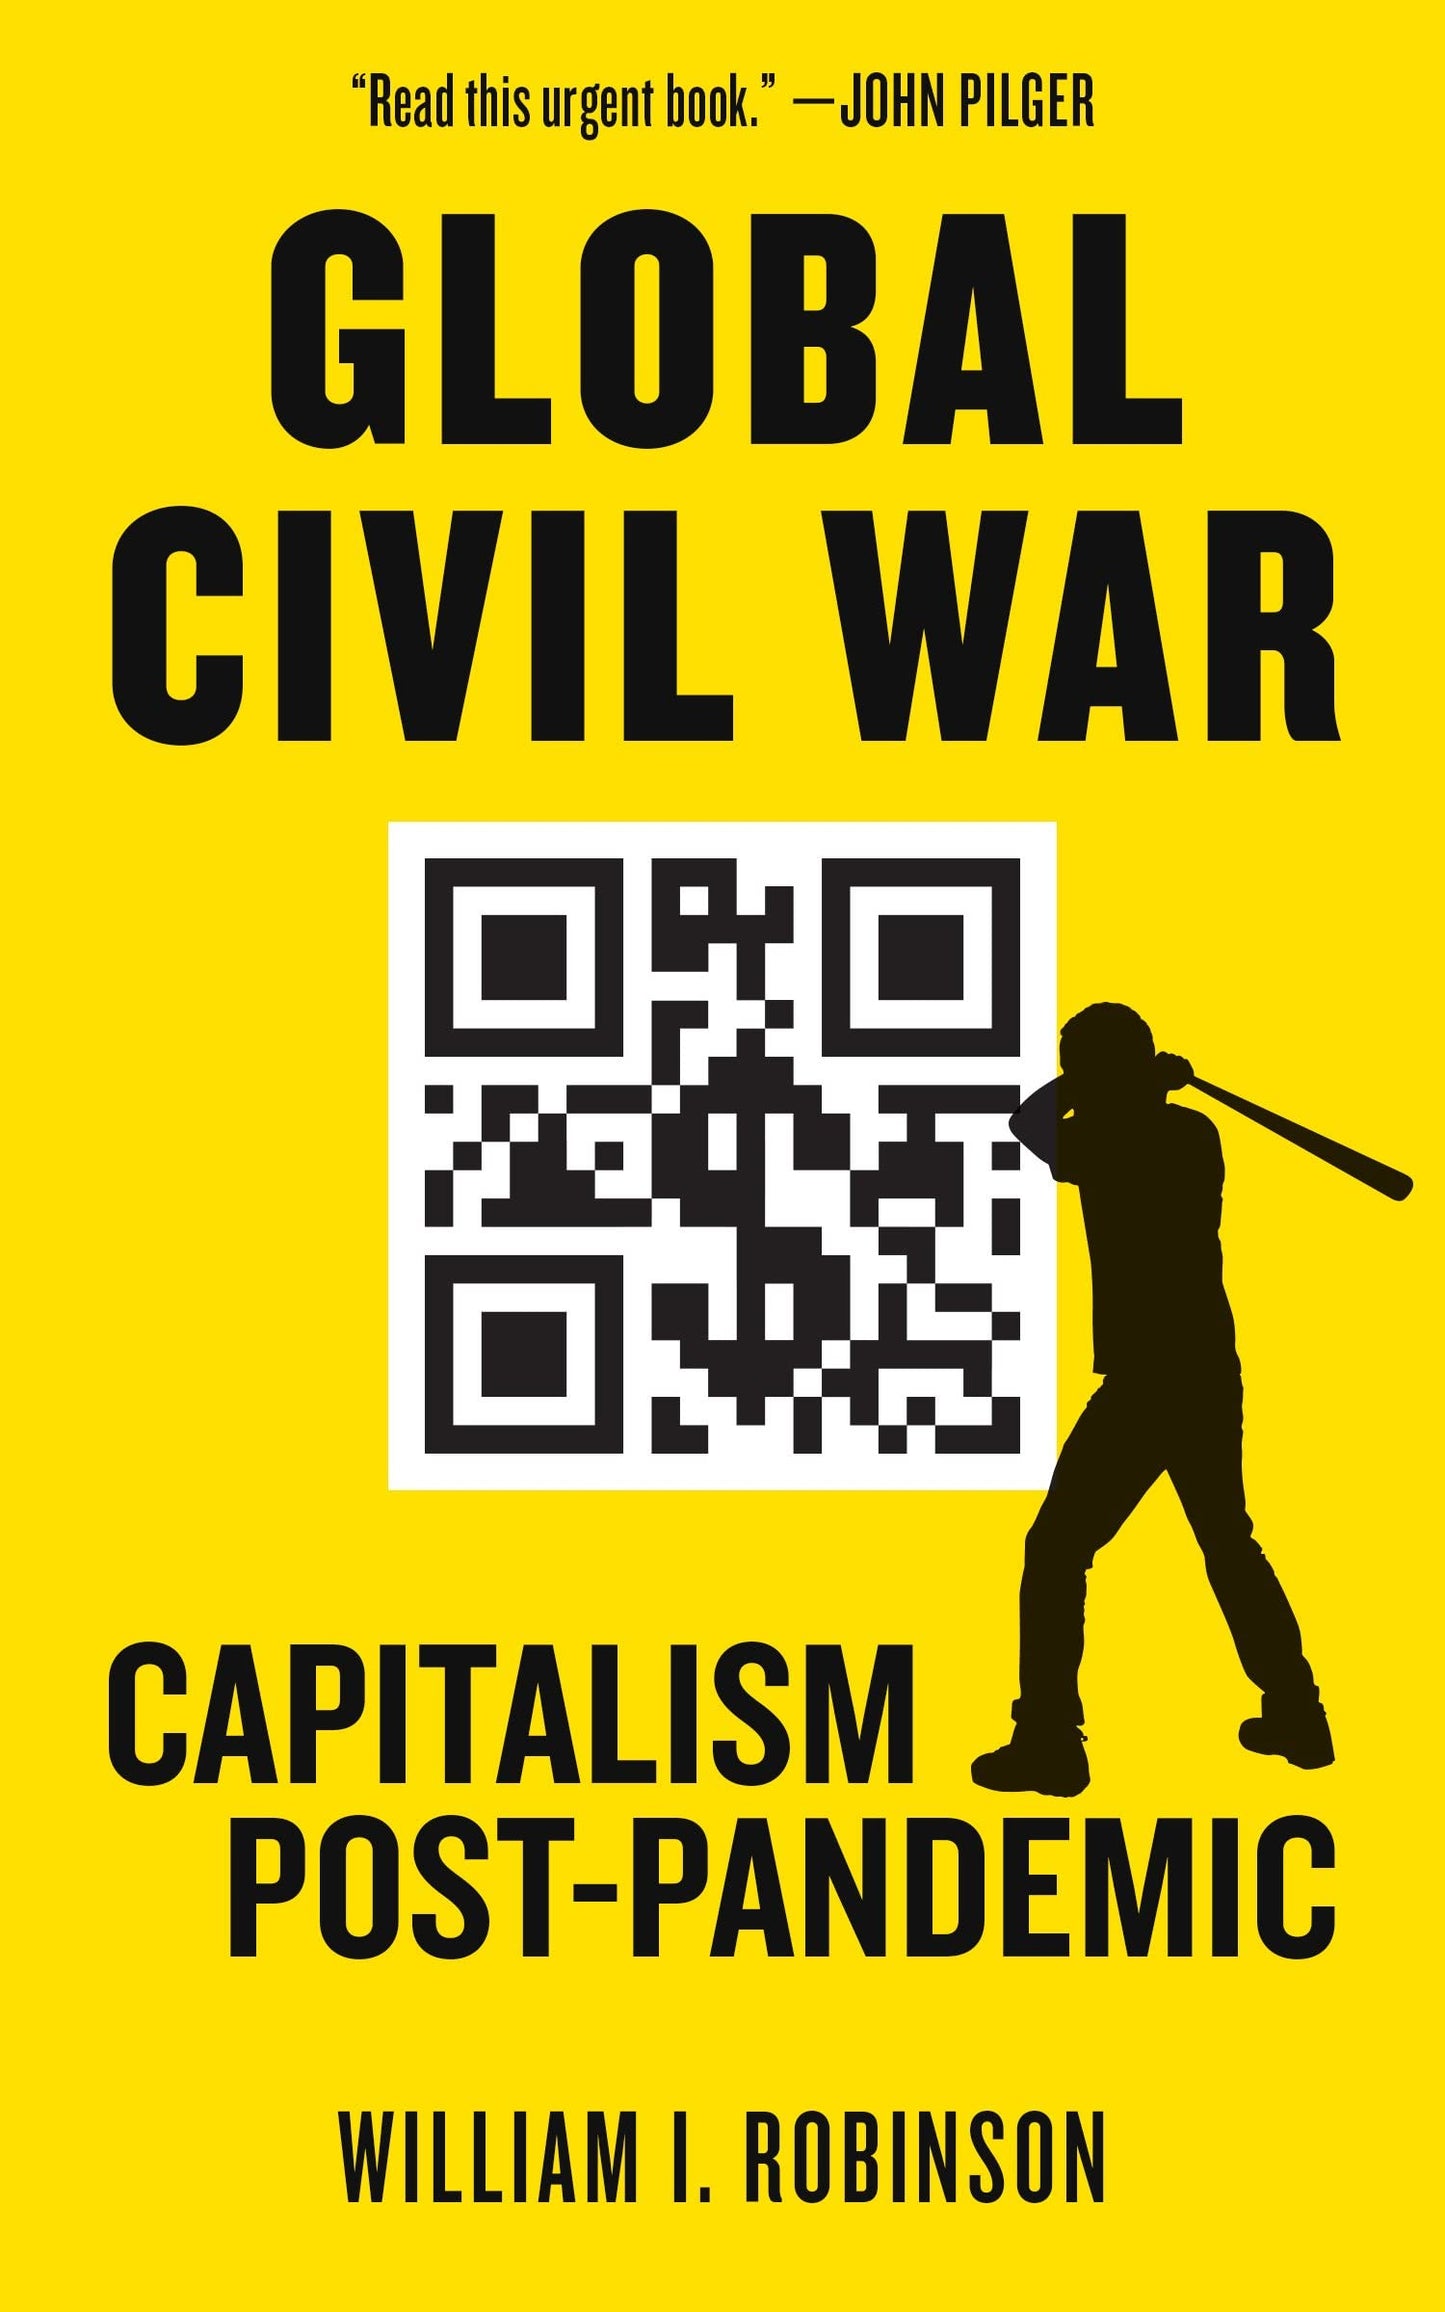 Global Civil War: Capitalism Post-Pandemic, by William I. Robinson